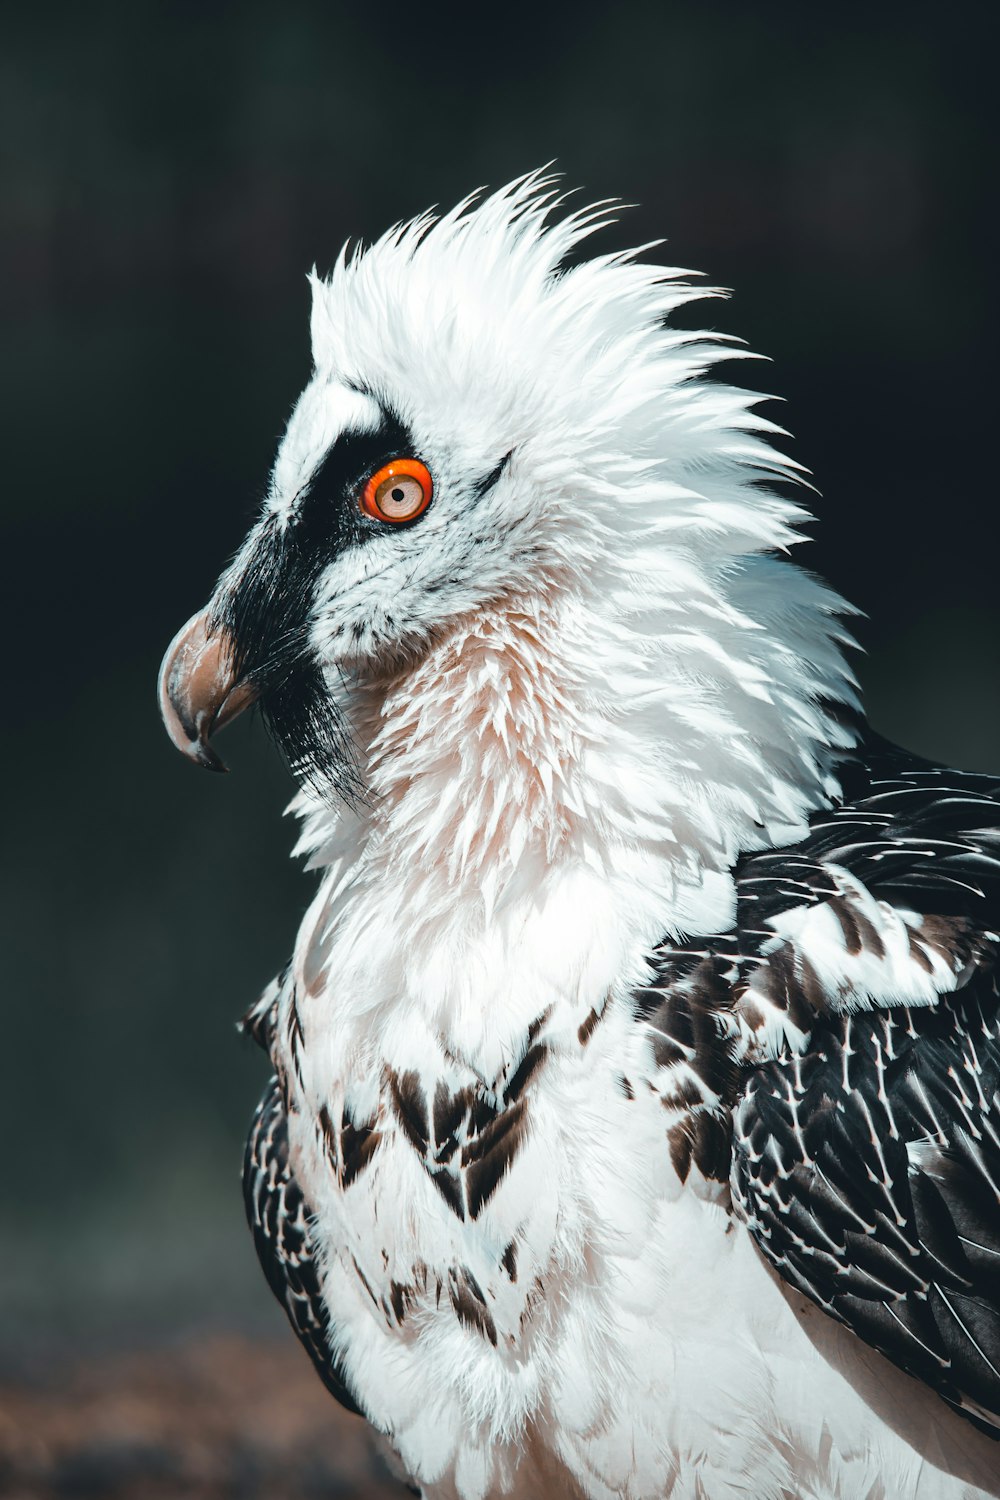 a white and black bird with orange eyes